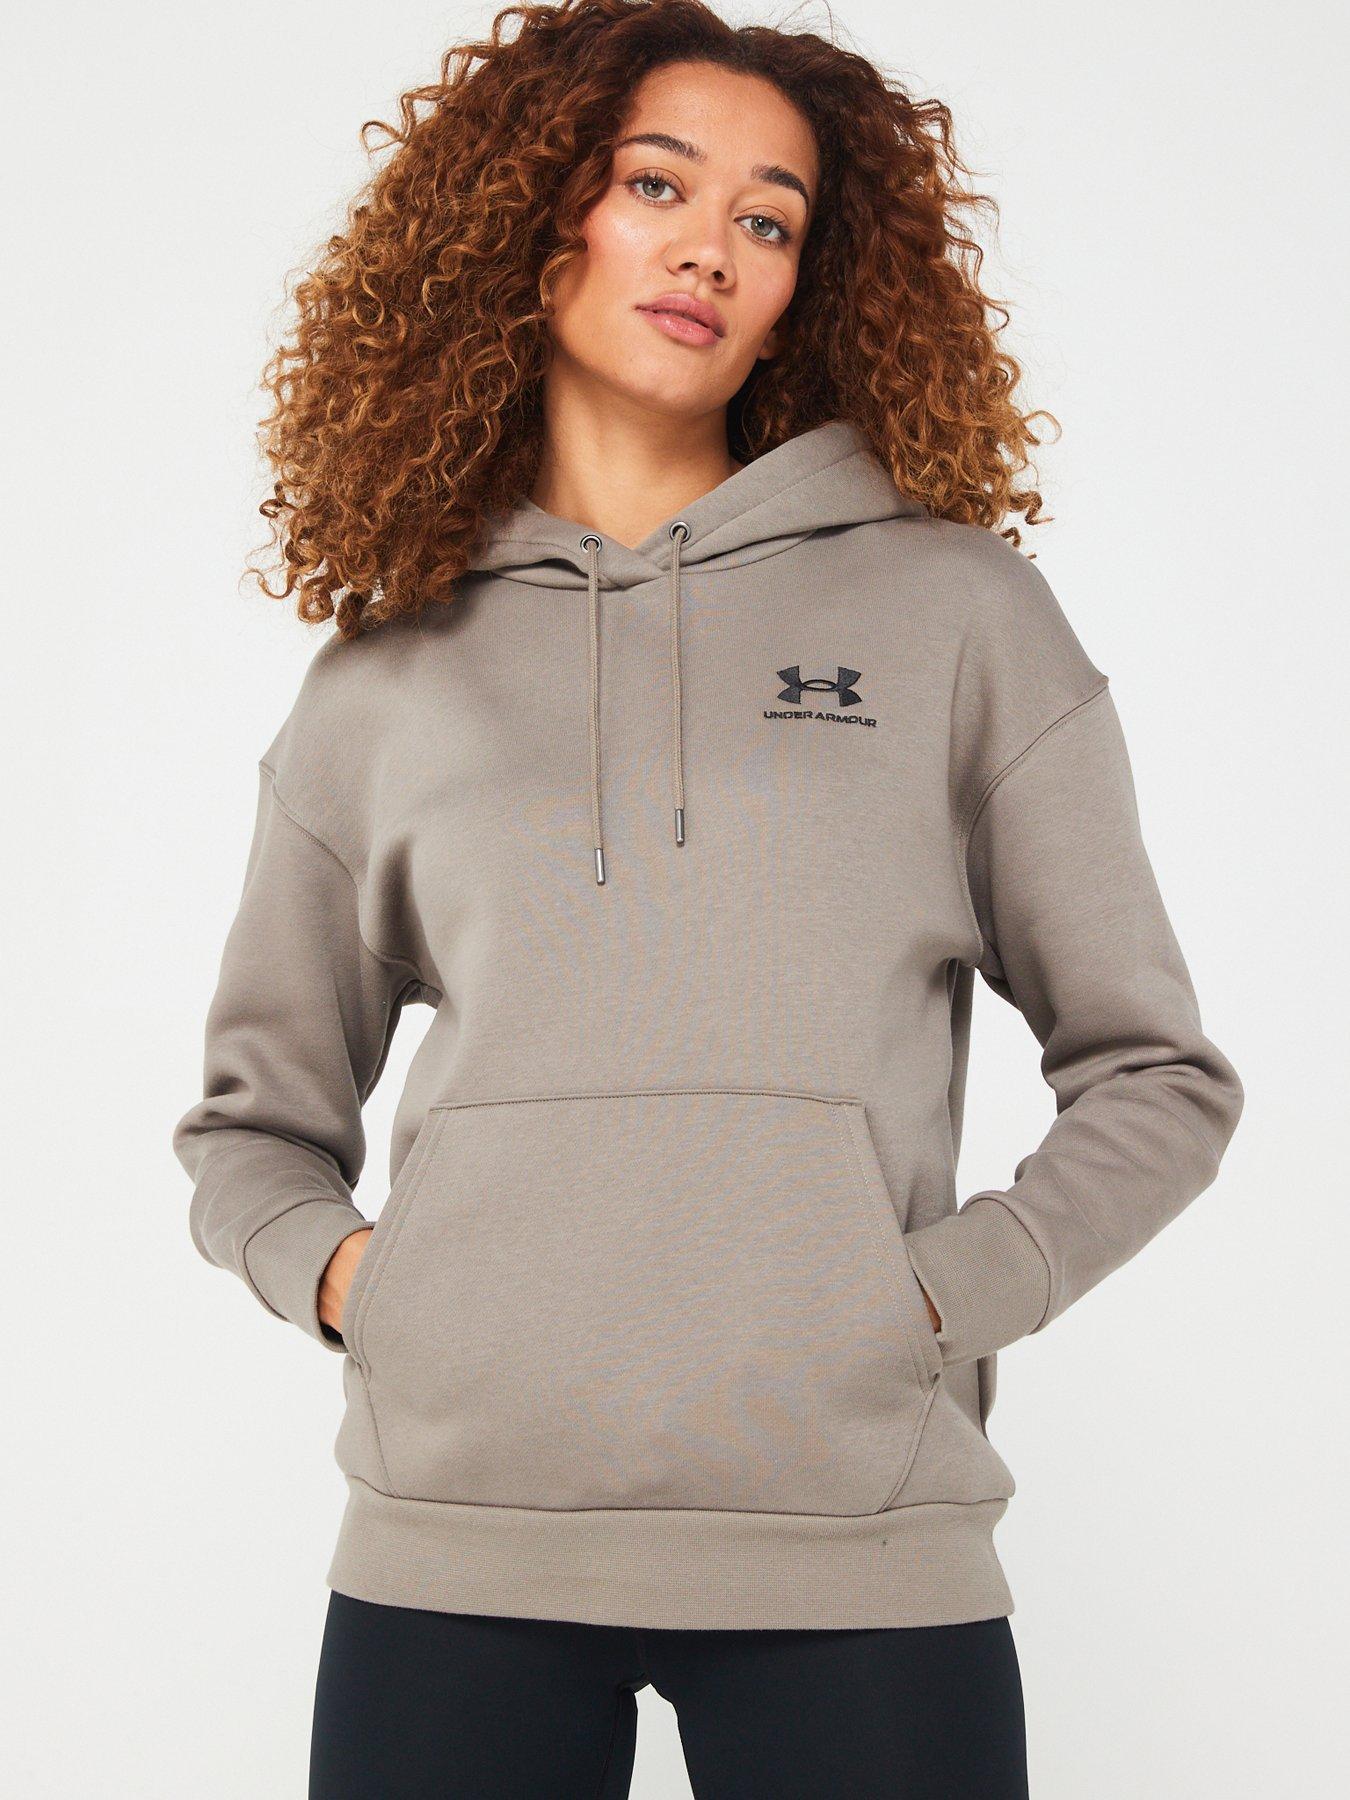 XL, Under armour, Hoodies & sweatshirts, Womens sports clothing, Sports  & leisure